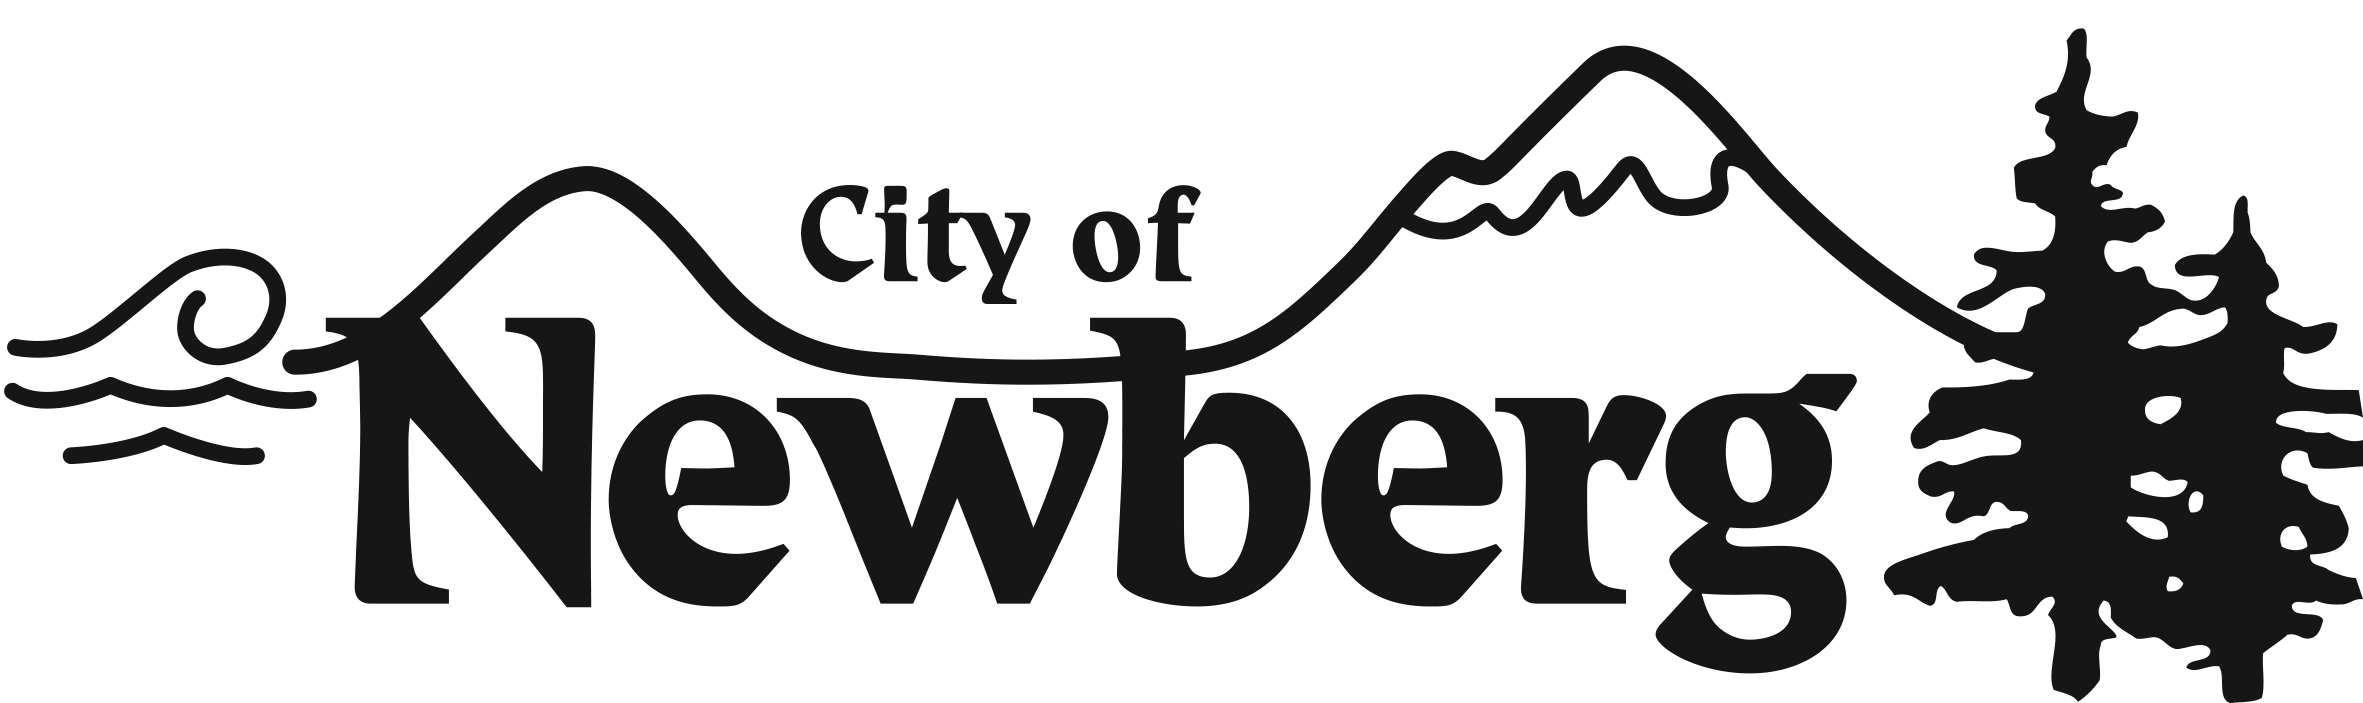 City of Newberg Logo Black - Transparent.png